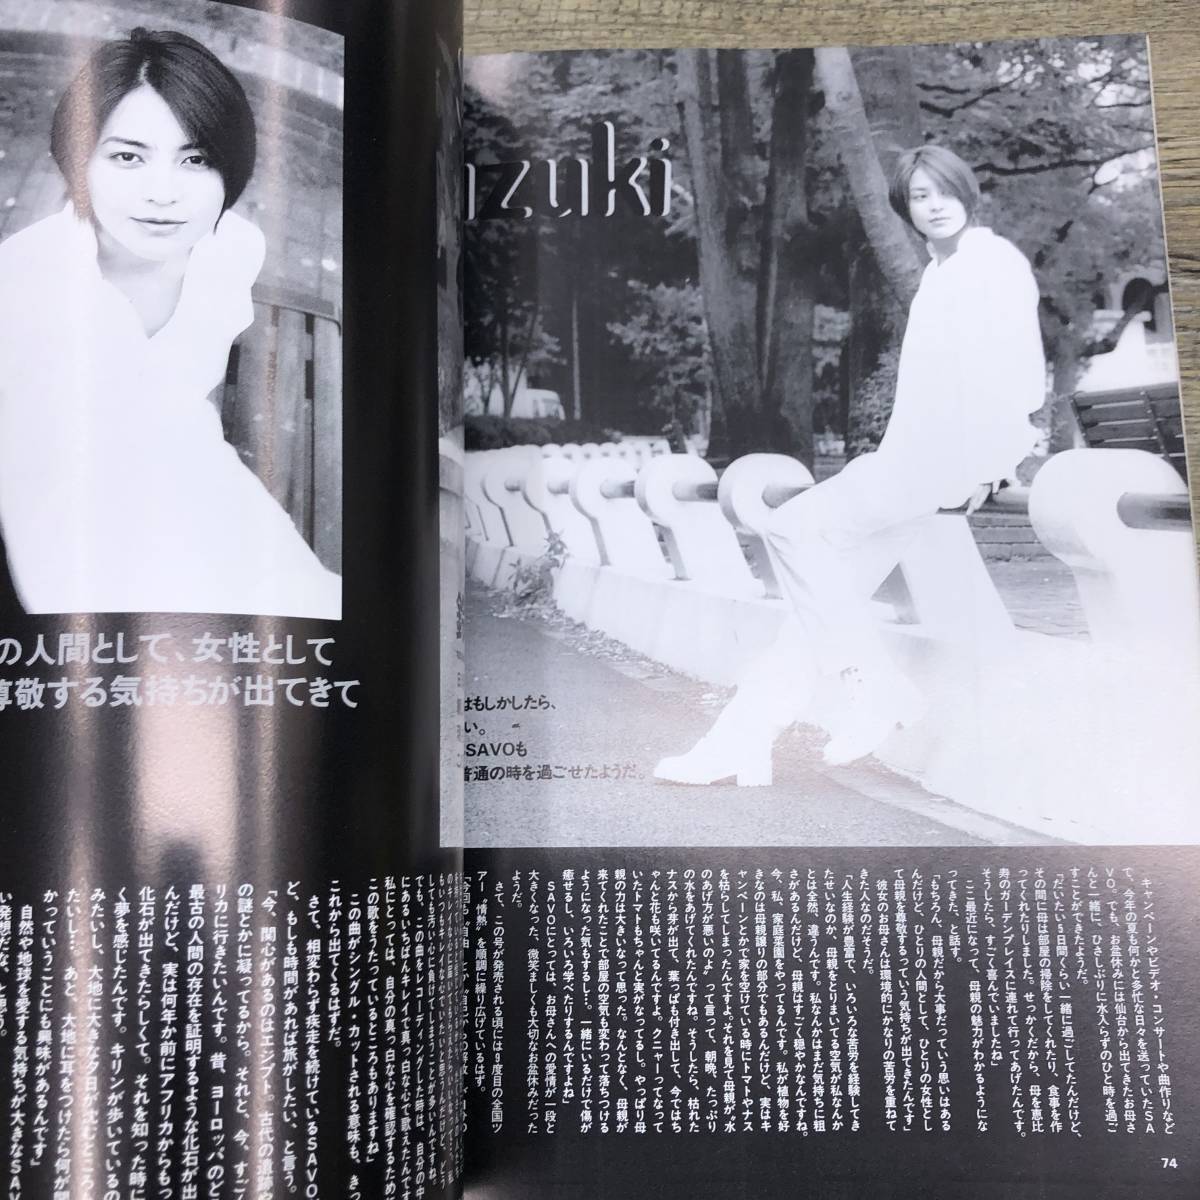 Z-6570#GiRLPOP девушка pop Vol.16 1995 год 11 месяц 5 день # Uchida Yuki # Tanimura Yumi Moritaka Chisato Nakayama Miho ..maki Amuro Namie # Sony Magazines 